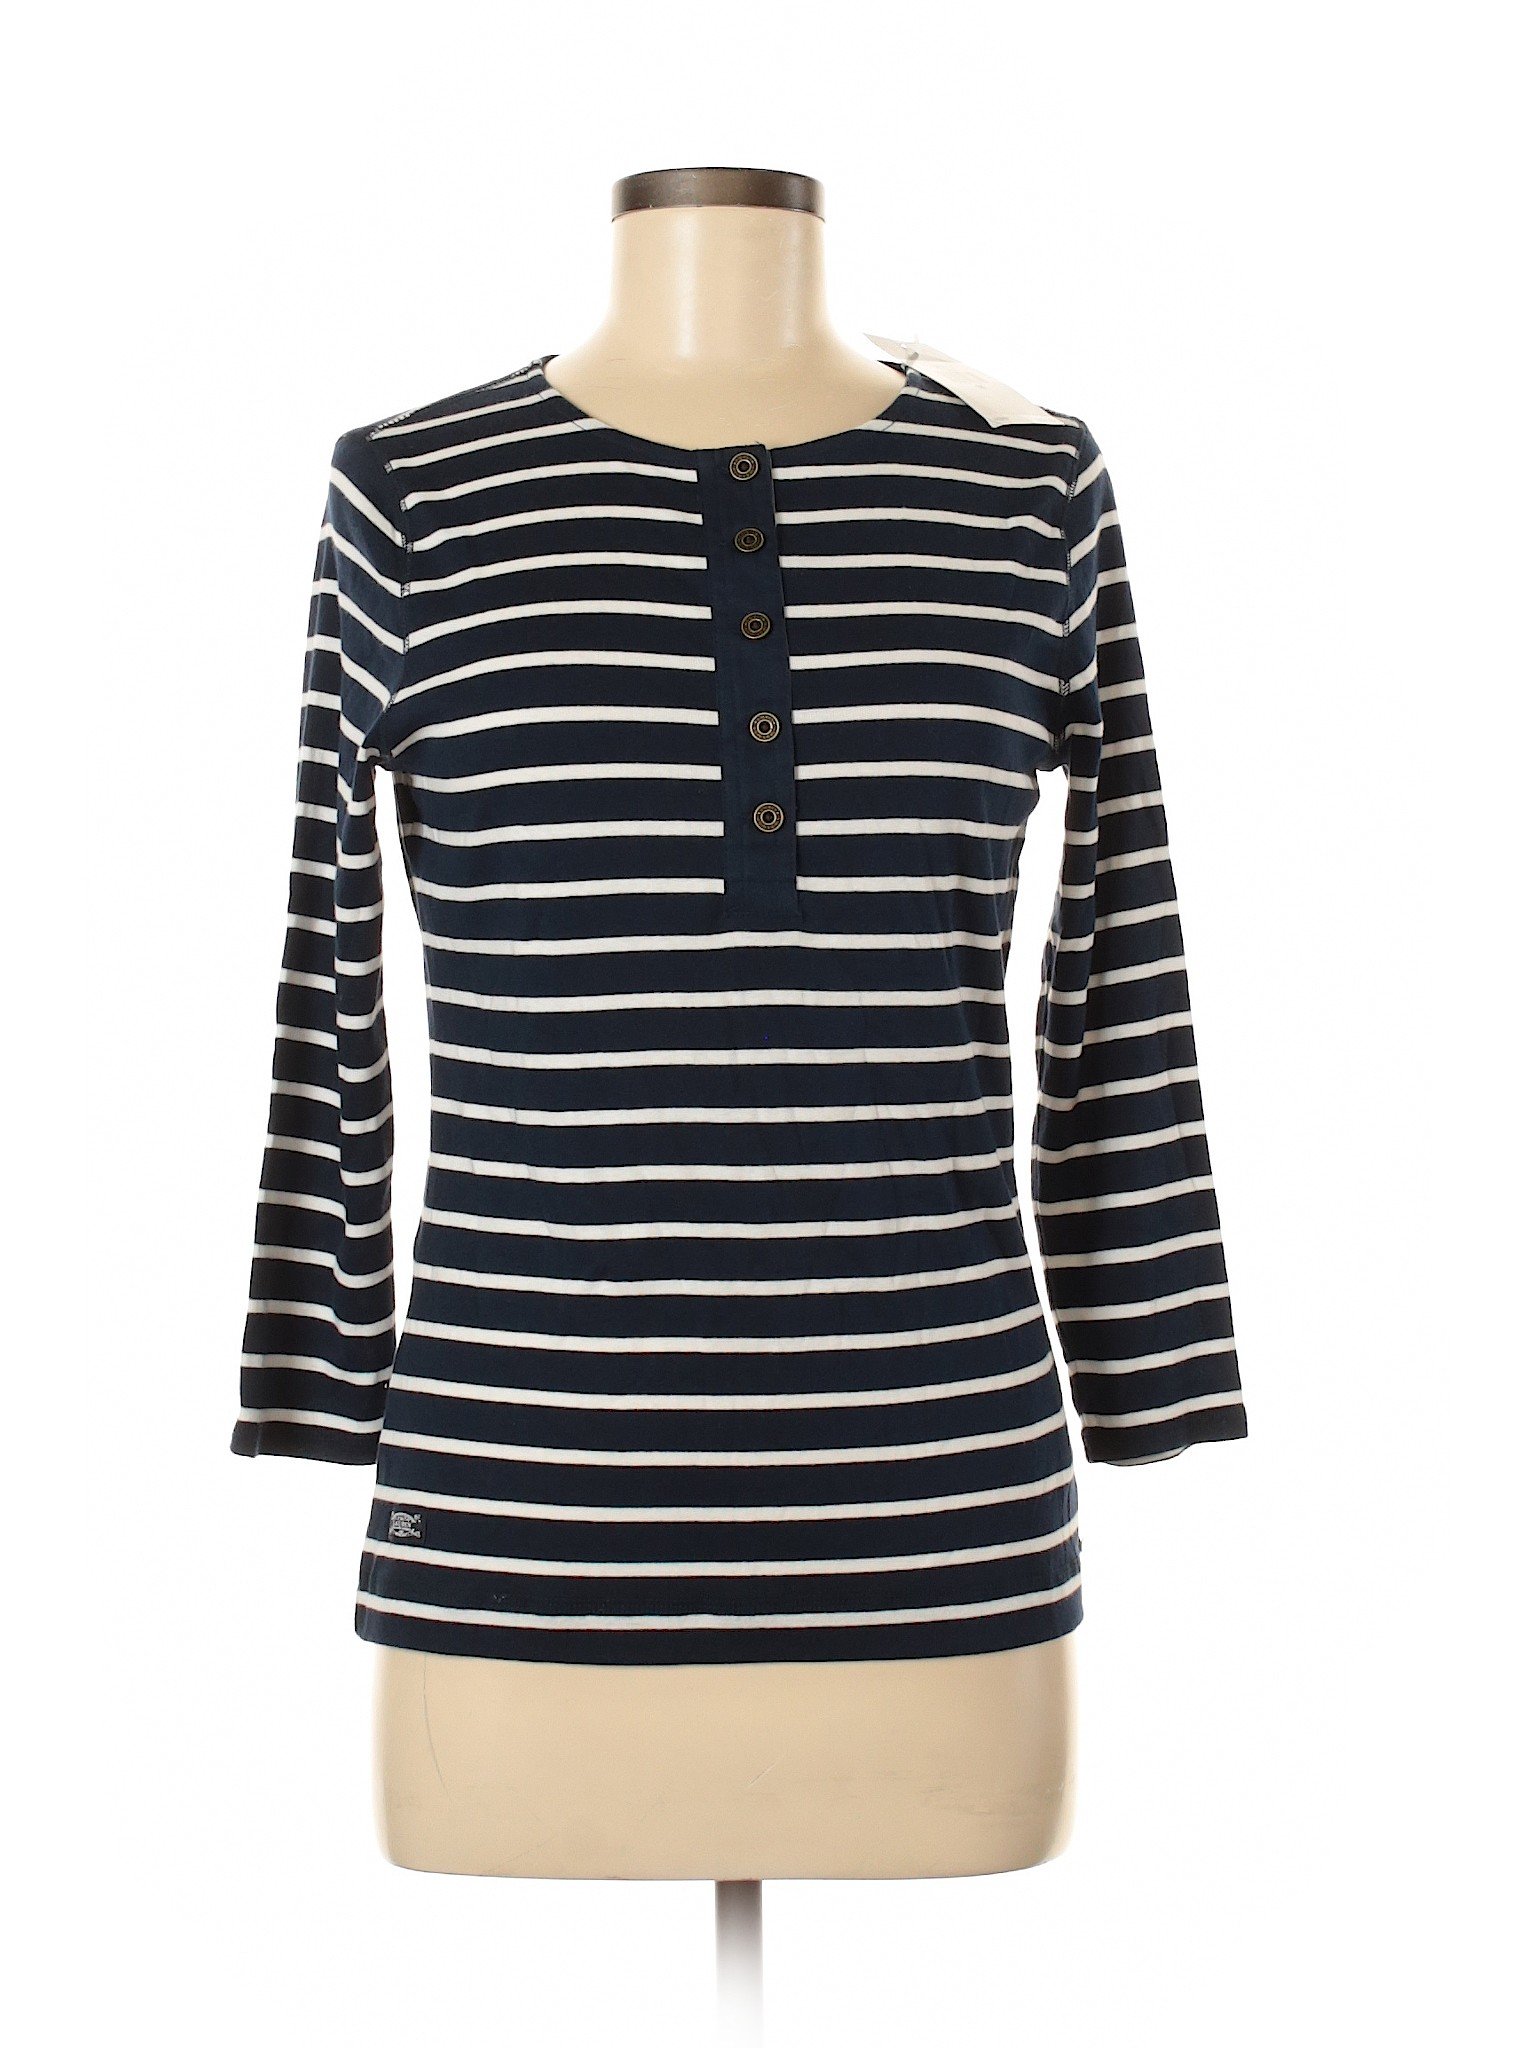 Lauren by Ralph Lauren 100% Cotton Stripes Blue 3/4 Sleeve Henley Size ...